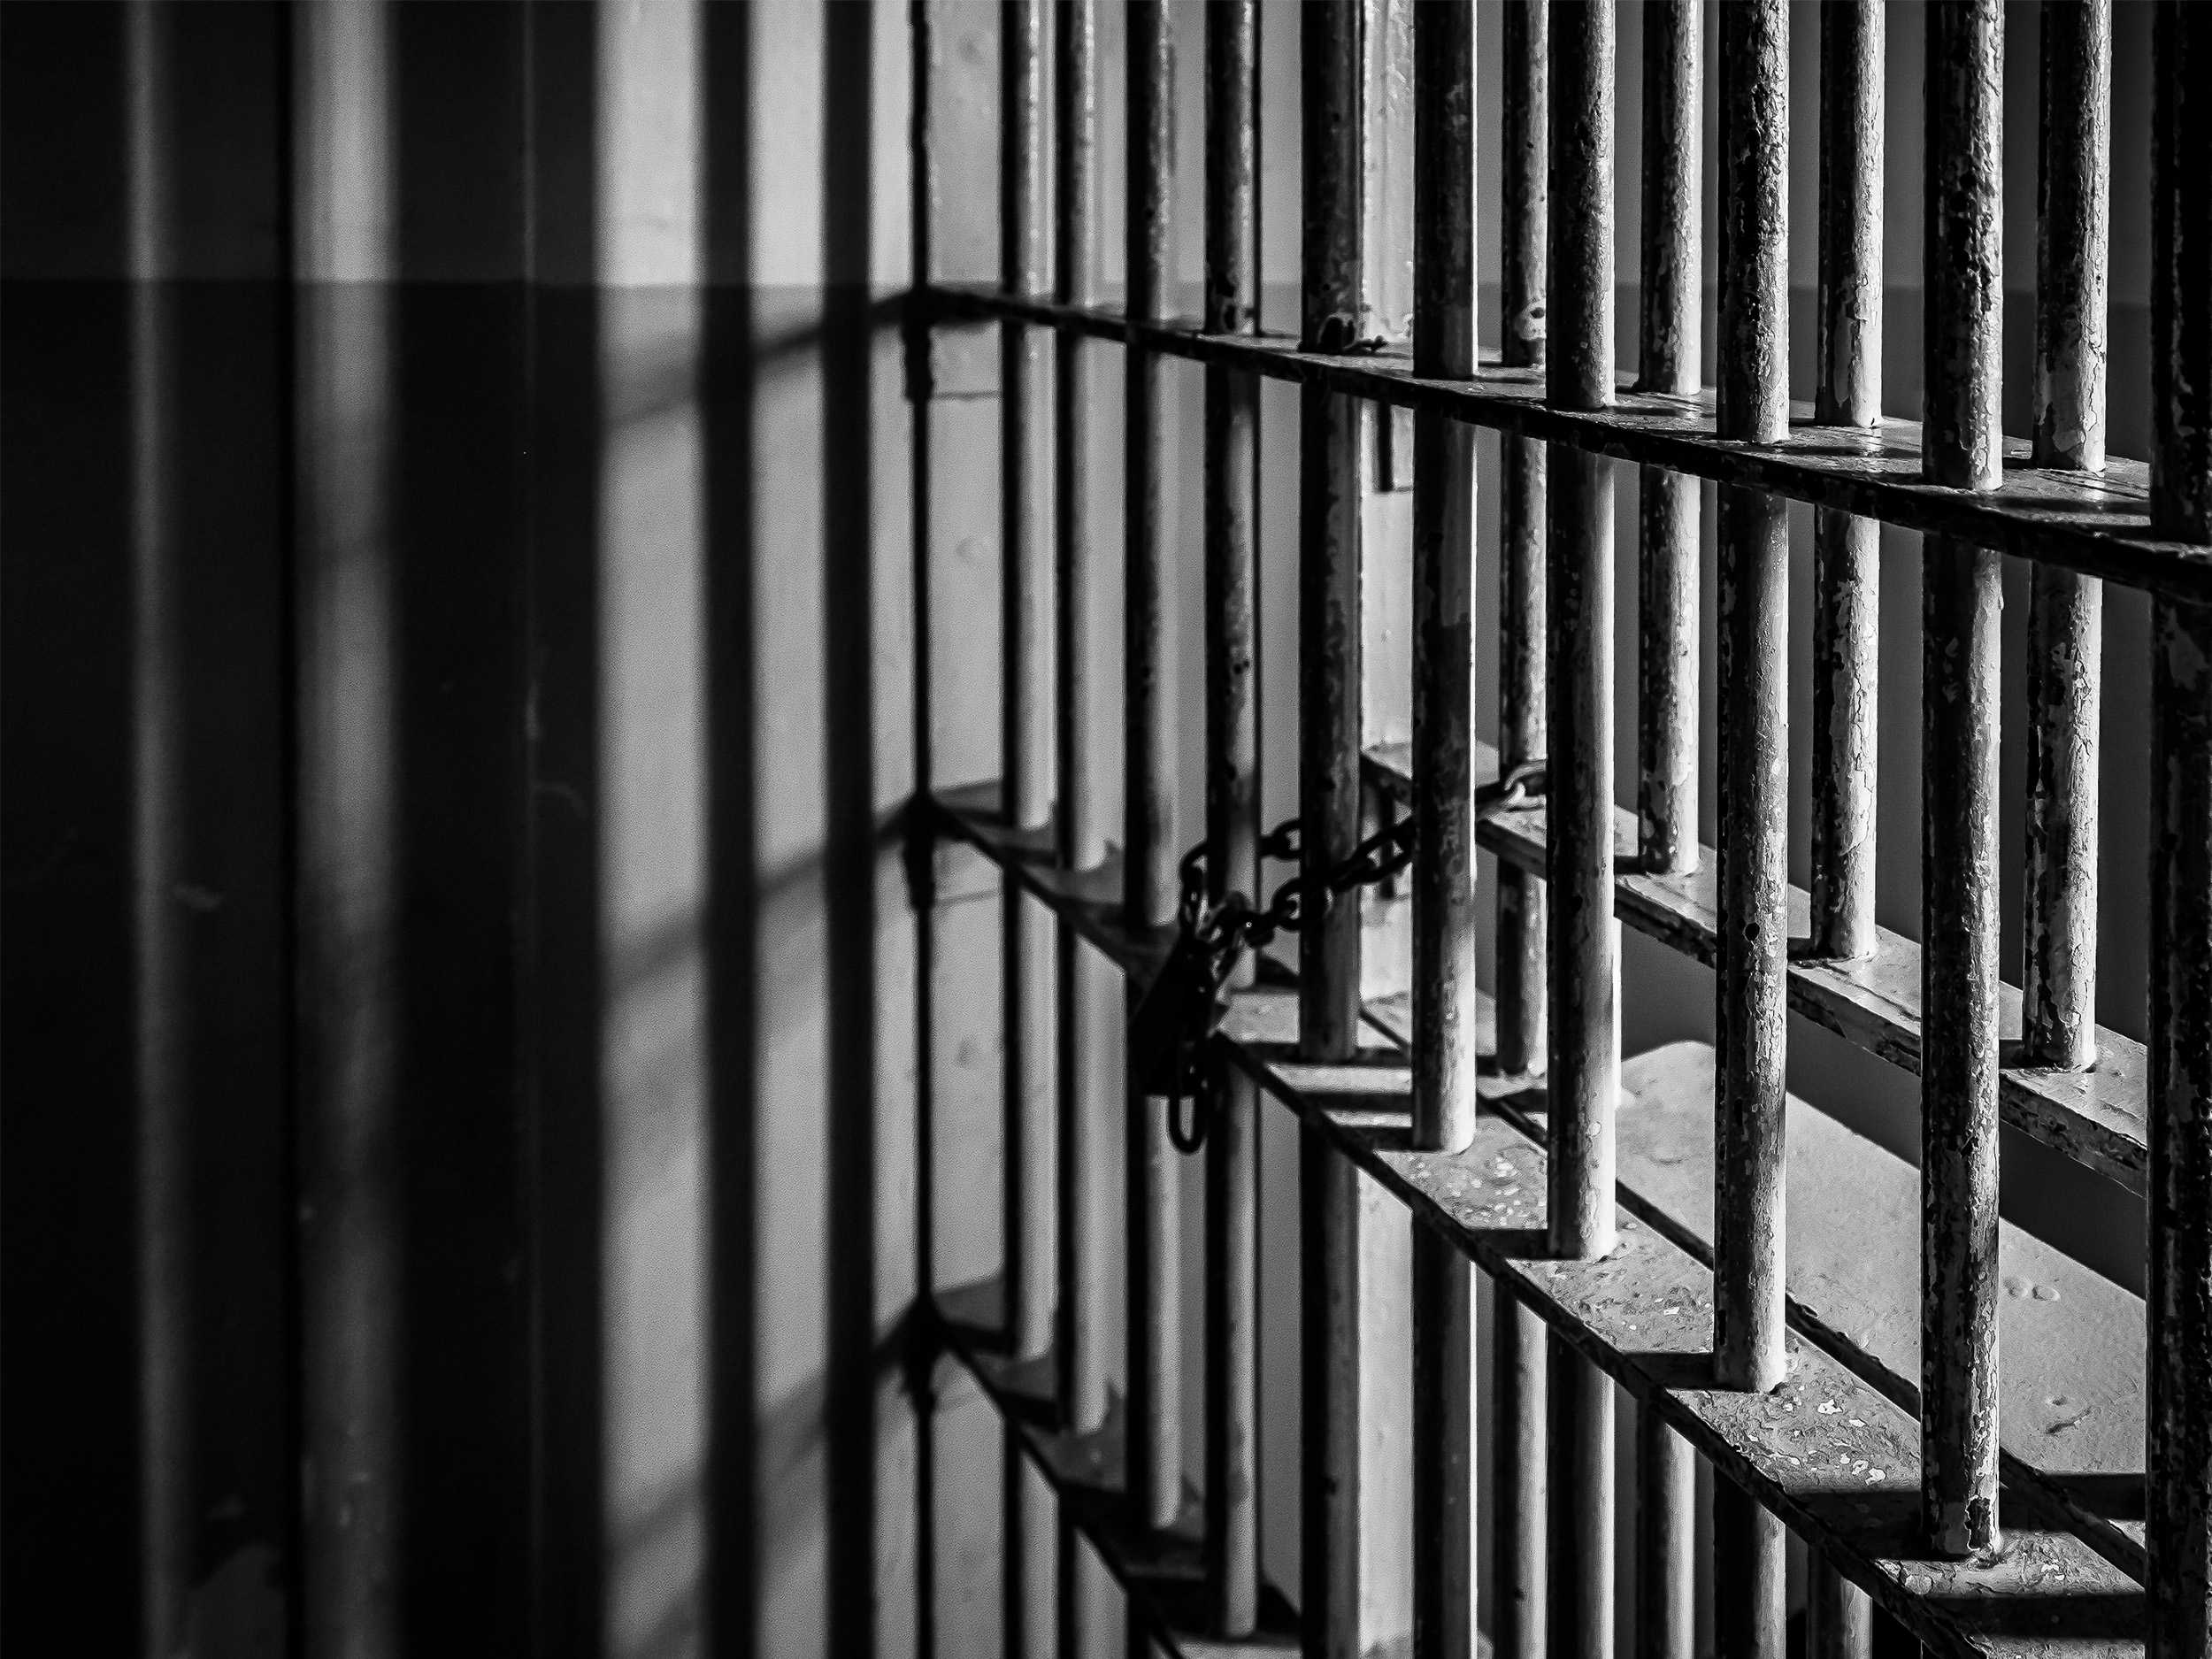 Prison cell bars